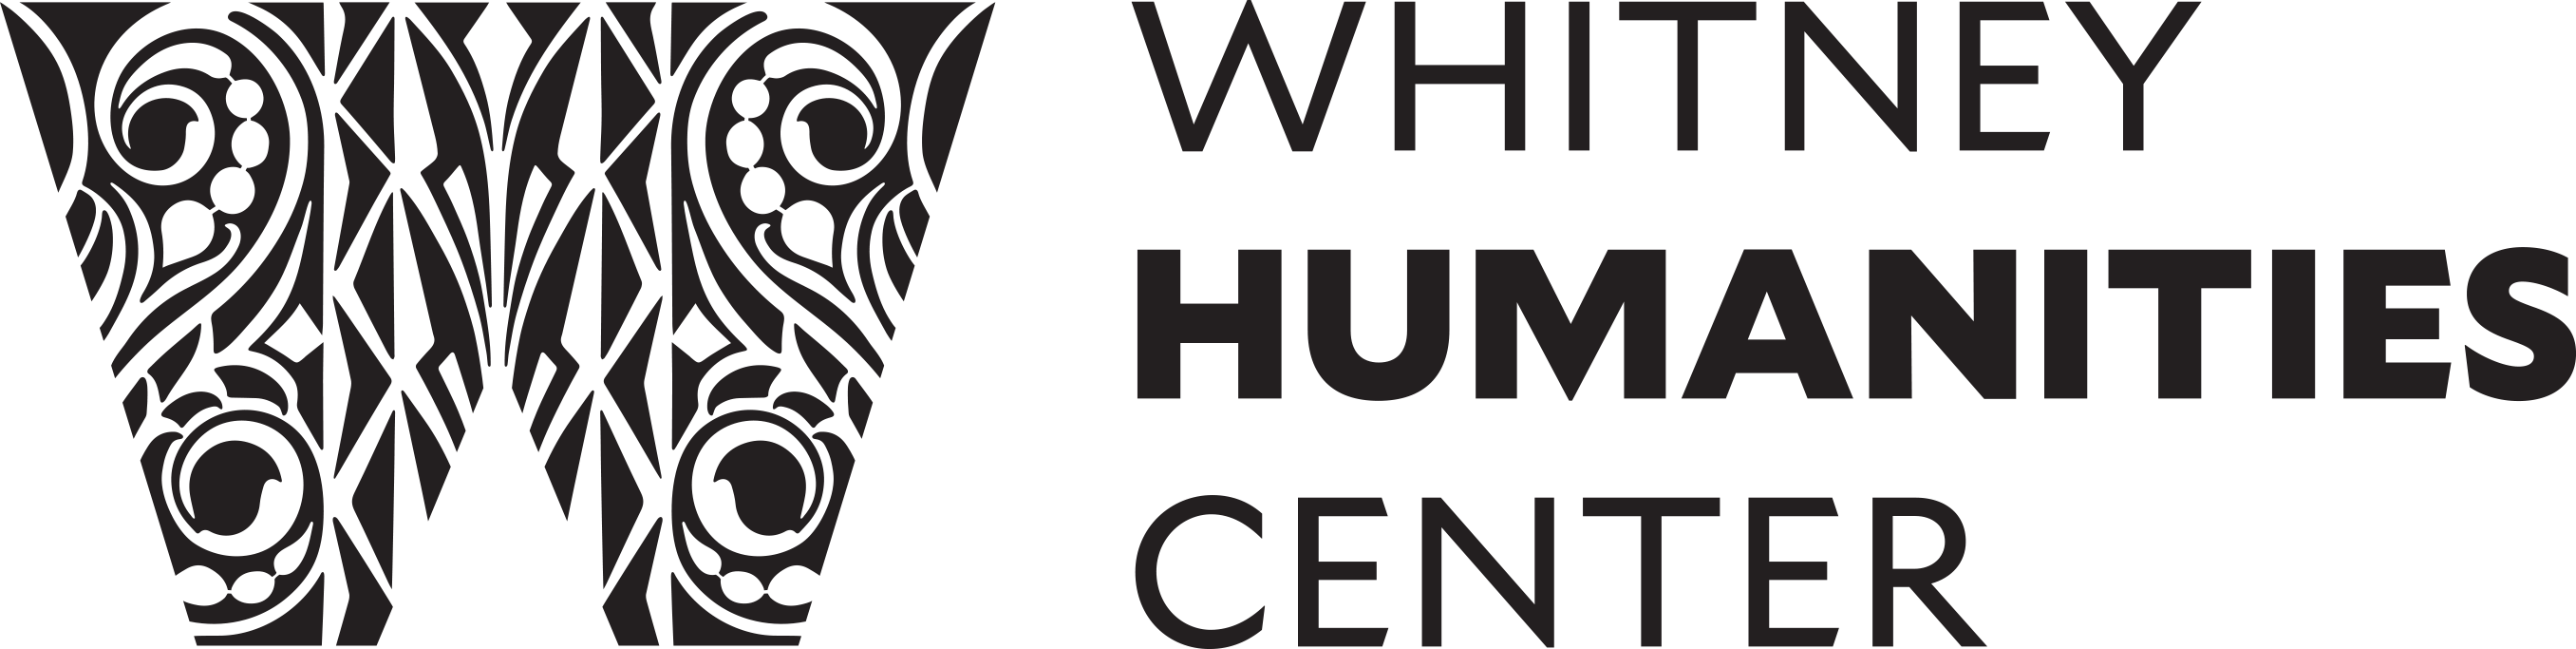 Whitney Humanities Center
